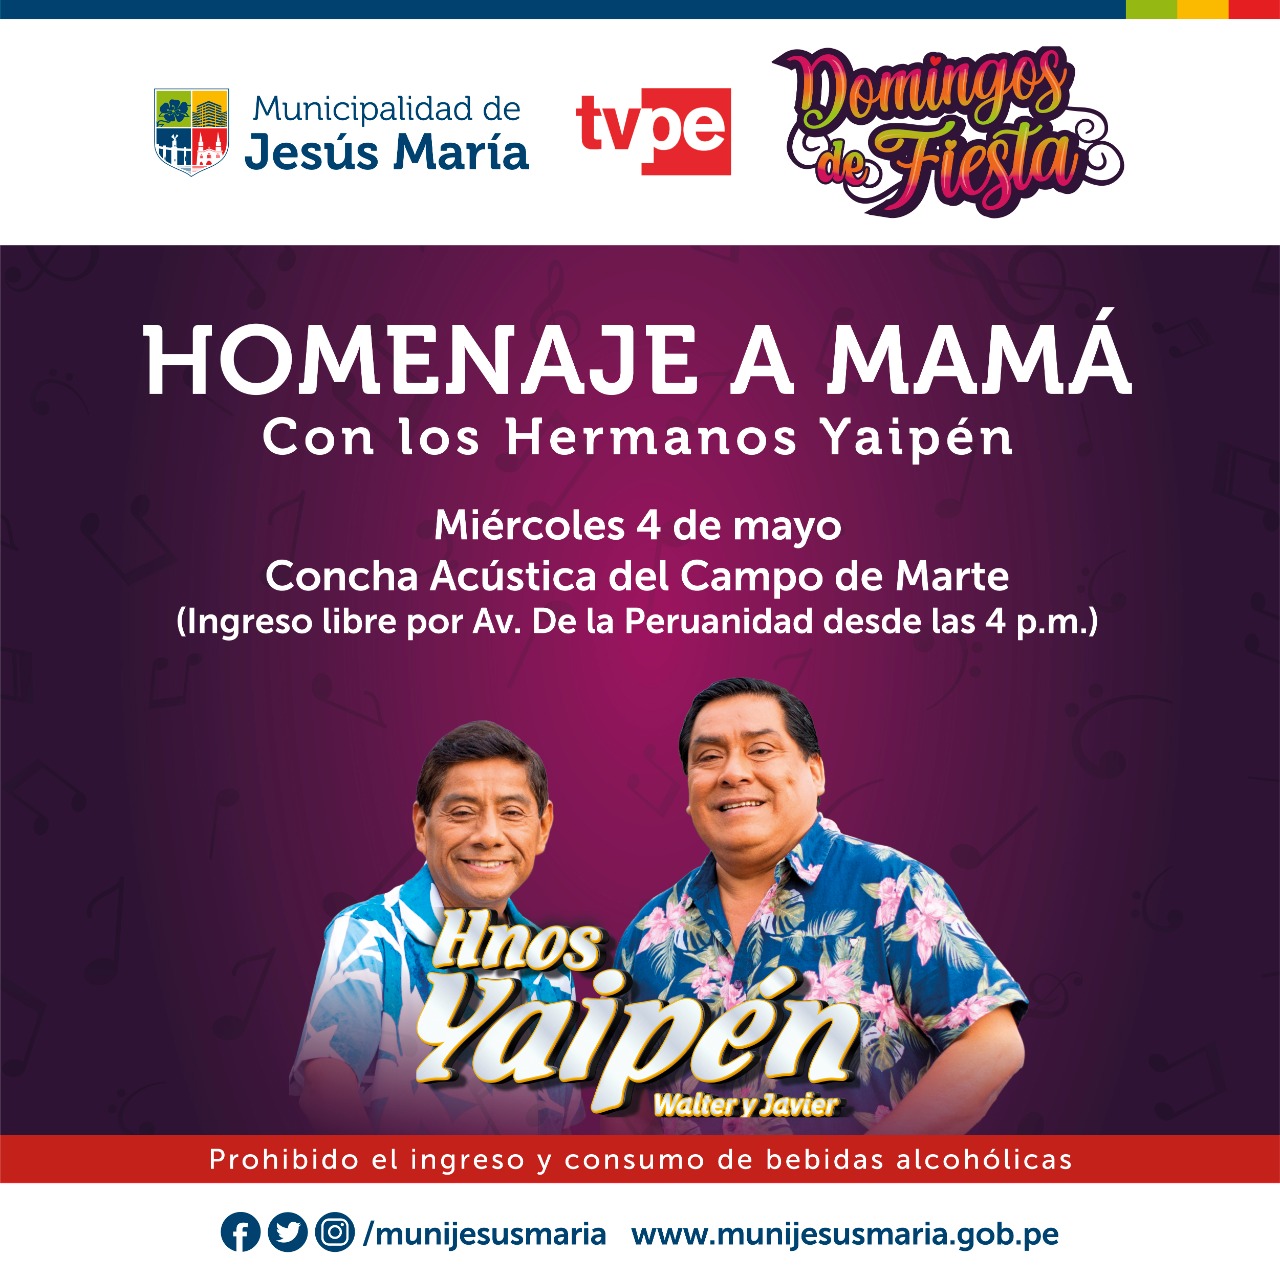 Afiche de promoción de Homenaje A Mamá donde cantarán los Hermanos Yaipén